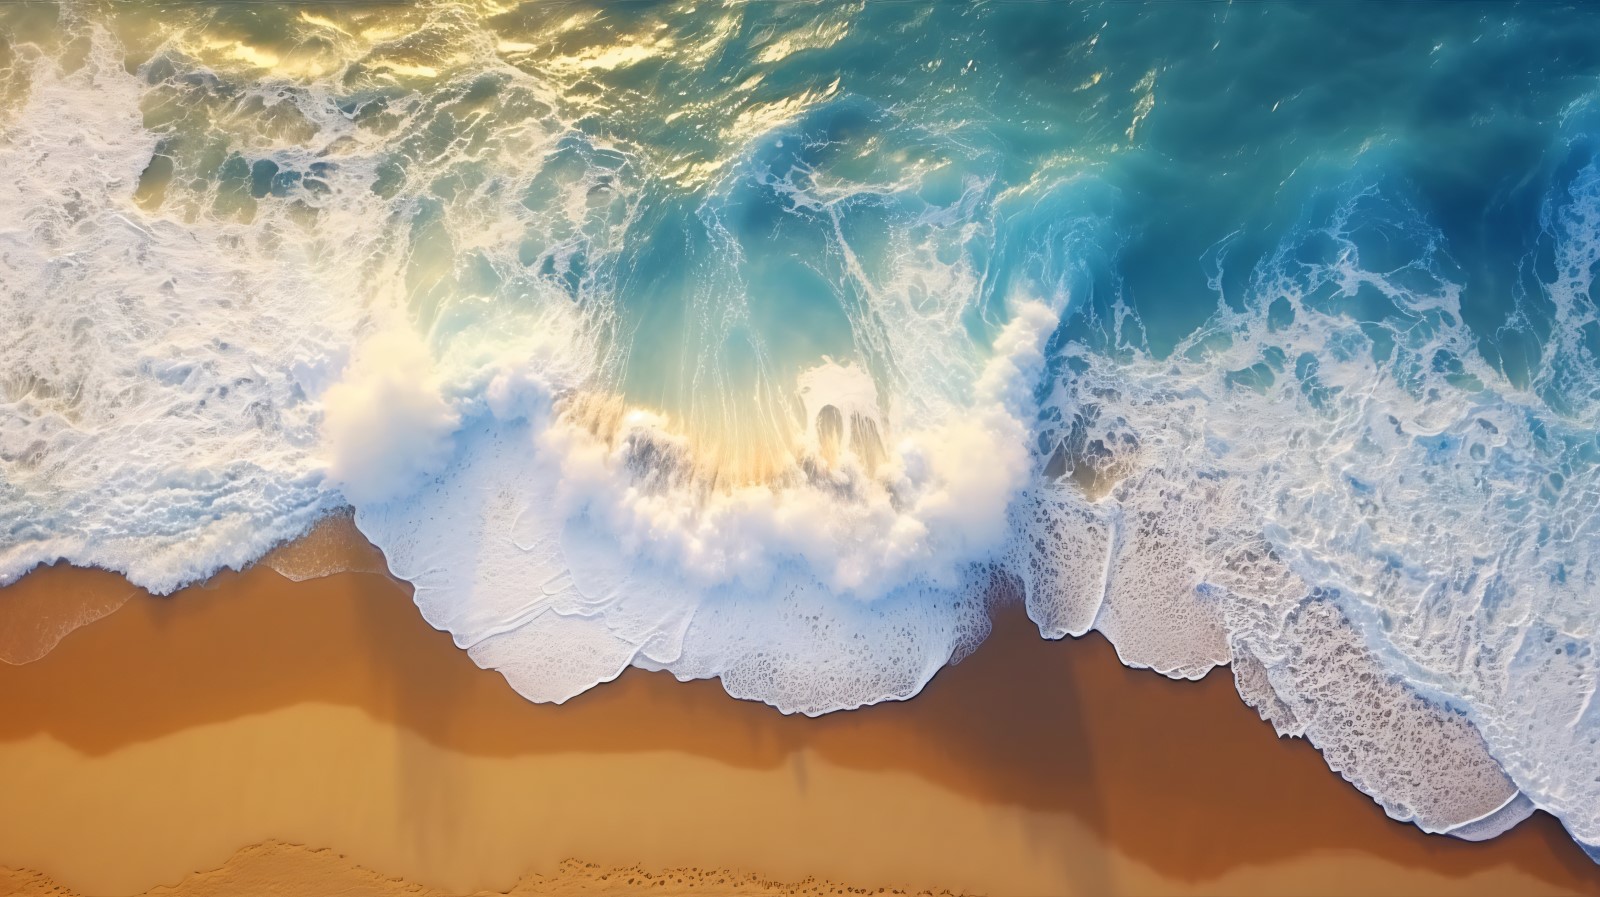 Beach scene waves surf with blue ocean sea island Aereal 019